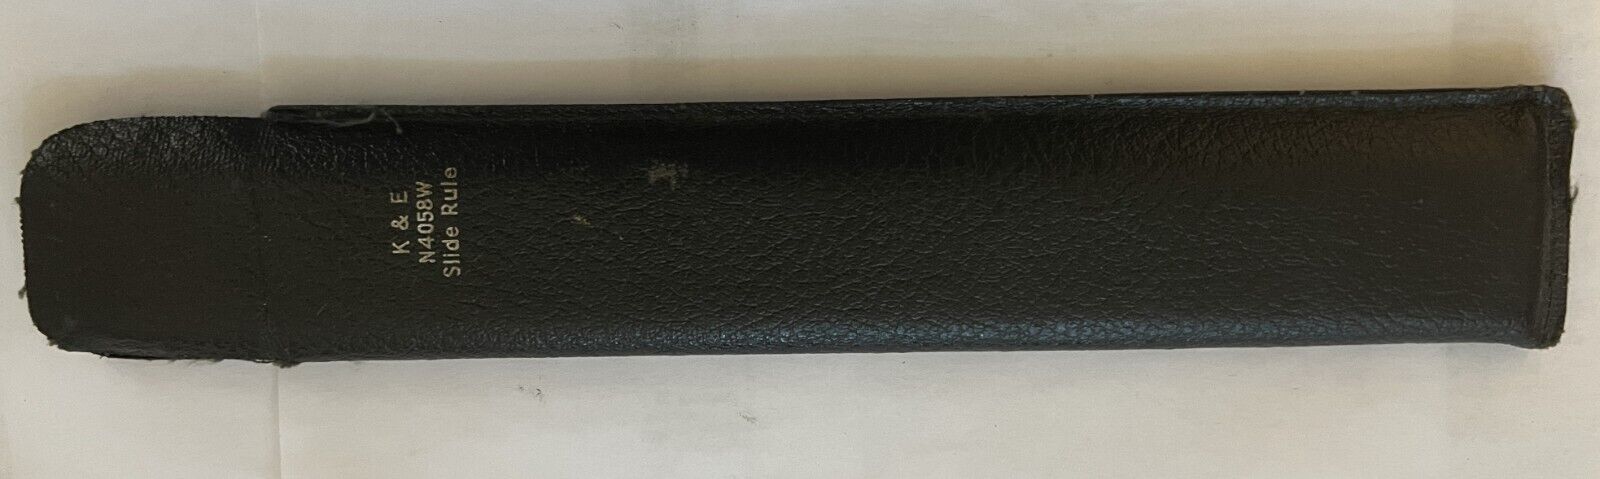 Antique K & E Keuffel Esser N4058W Slide Rule black leather case, 11.2